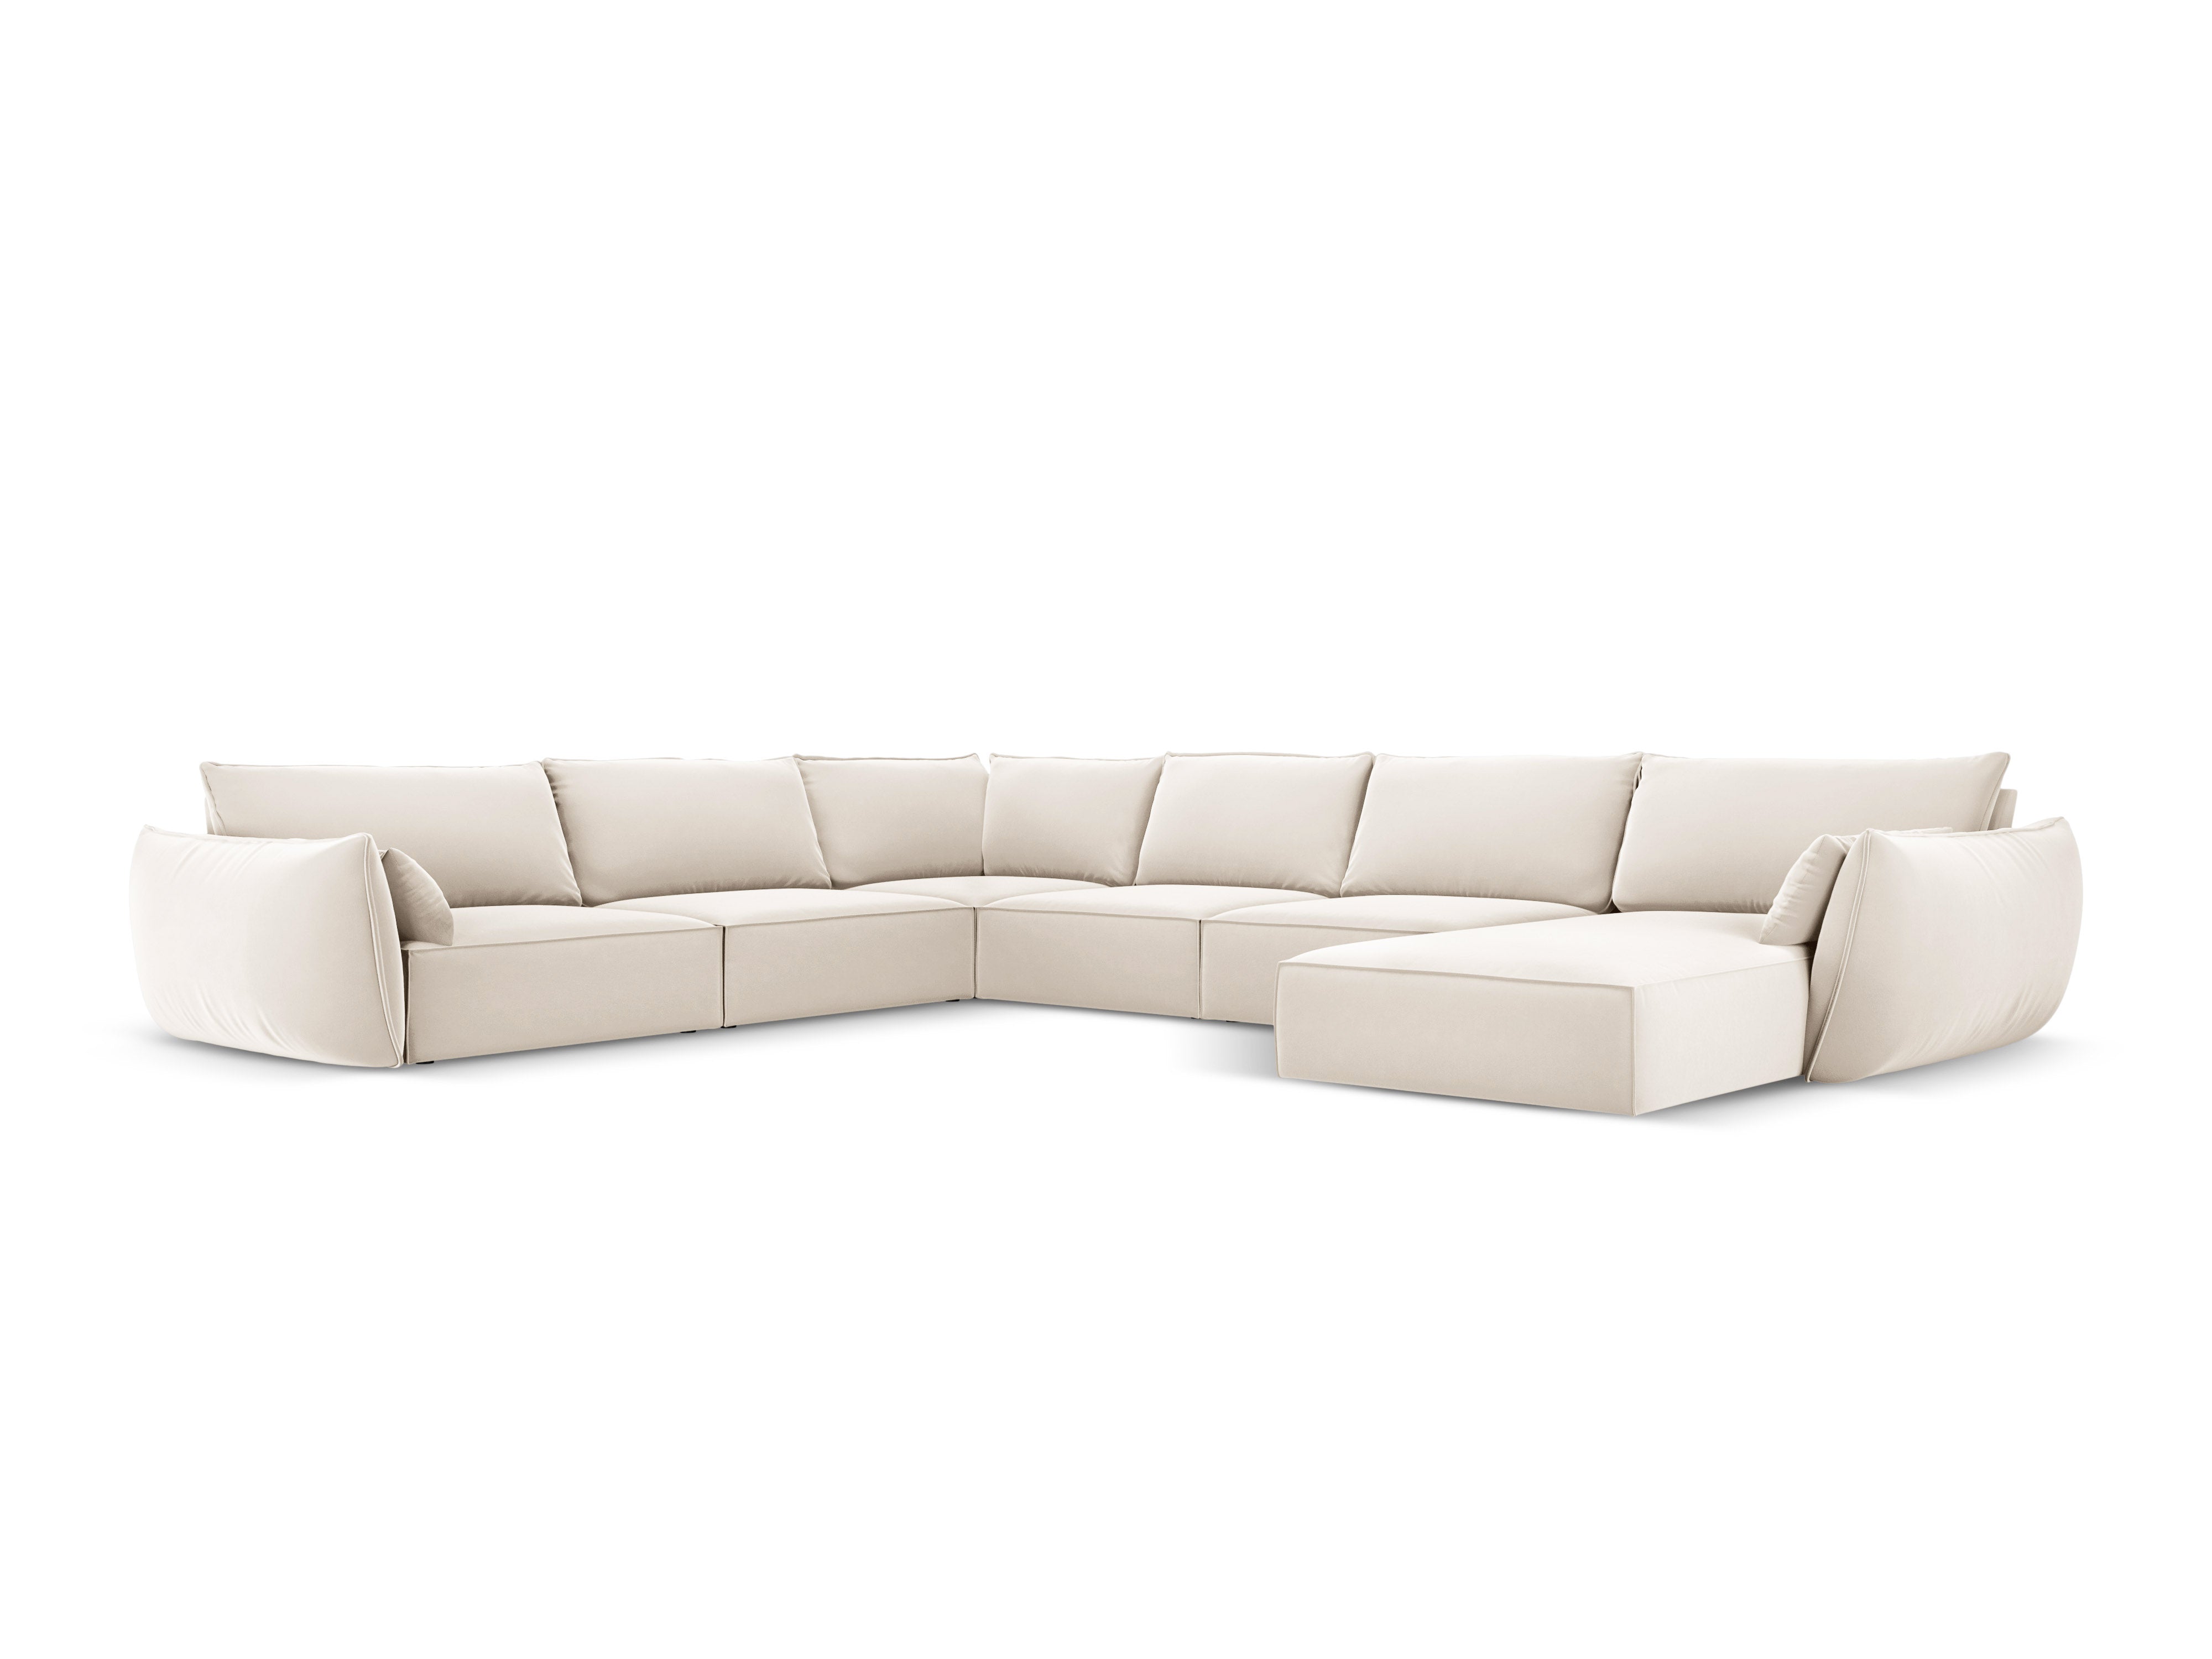 Velvet Panoramic Left Corner Sofa, "Vanda", 8 Seats, 384x284x85
Made in Europe, Mazzini Sofas, Eye on Design